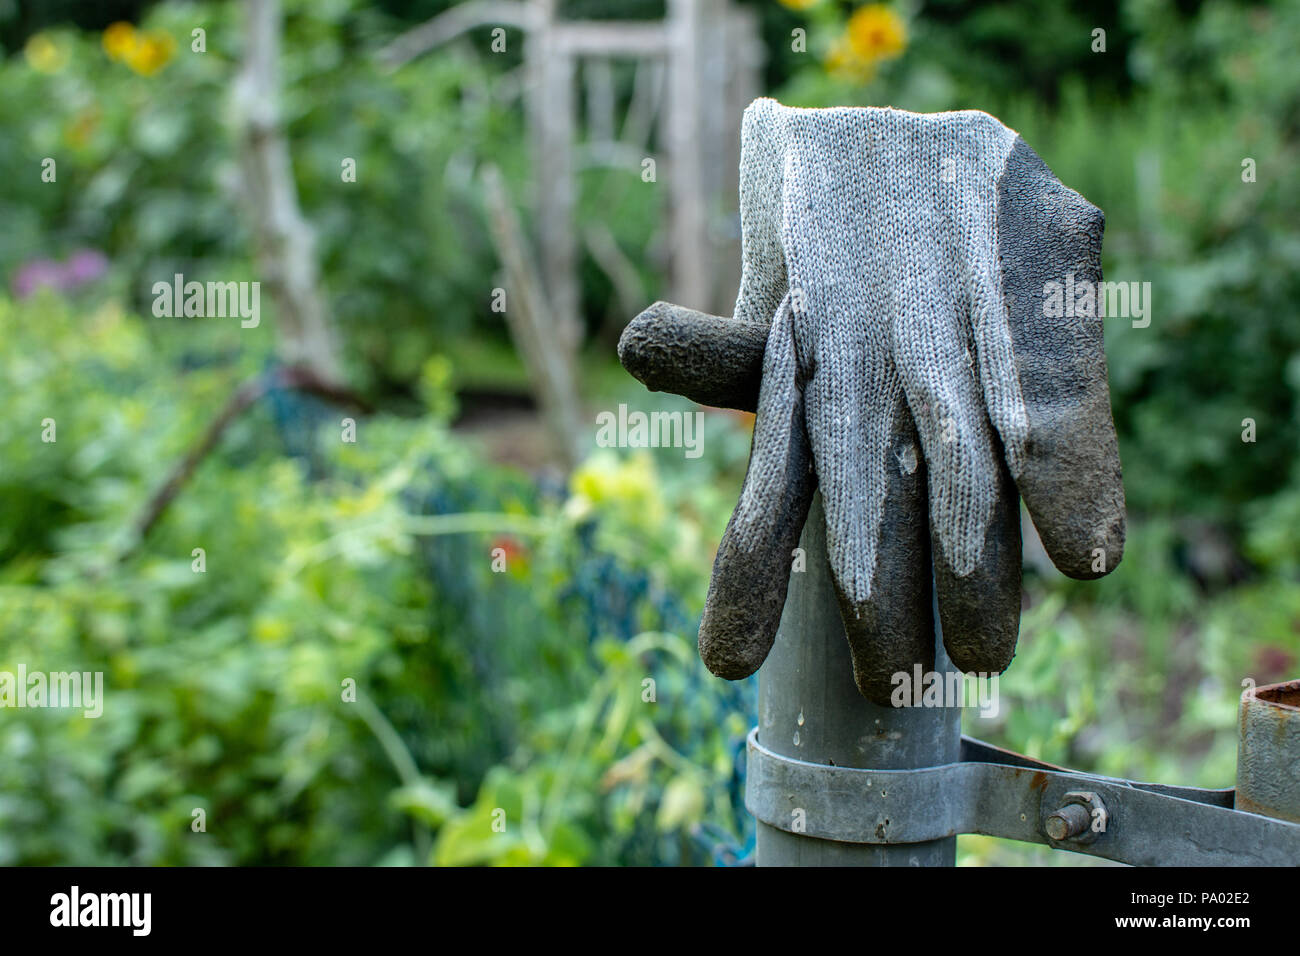 Garden glove on a post in the garden Stock Photo